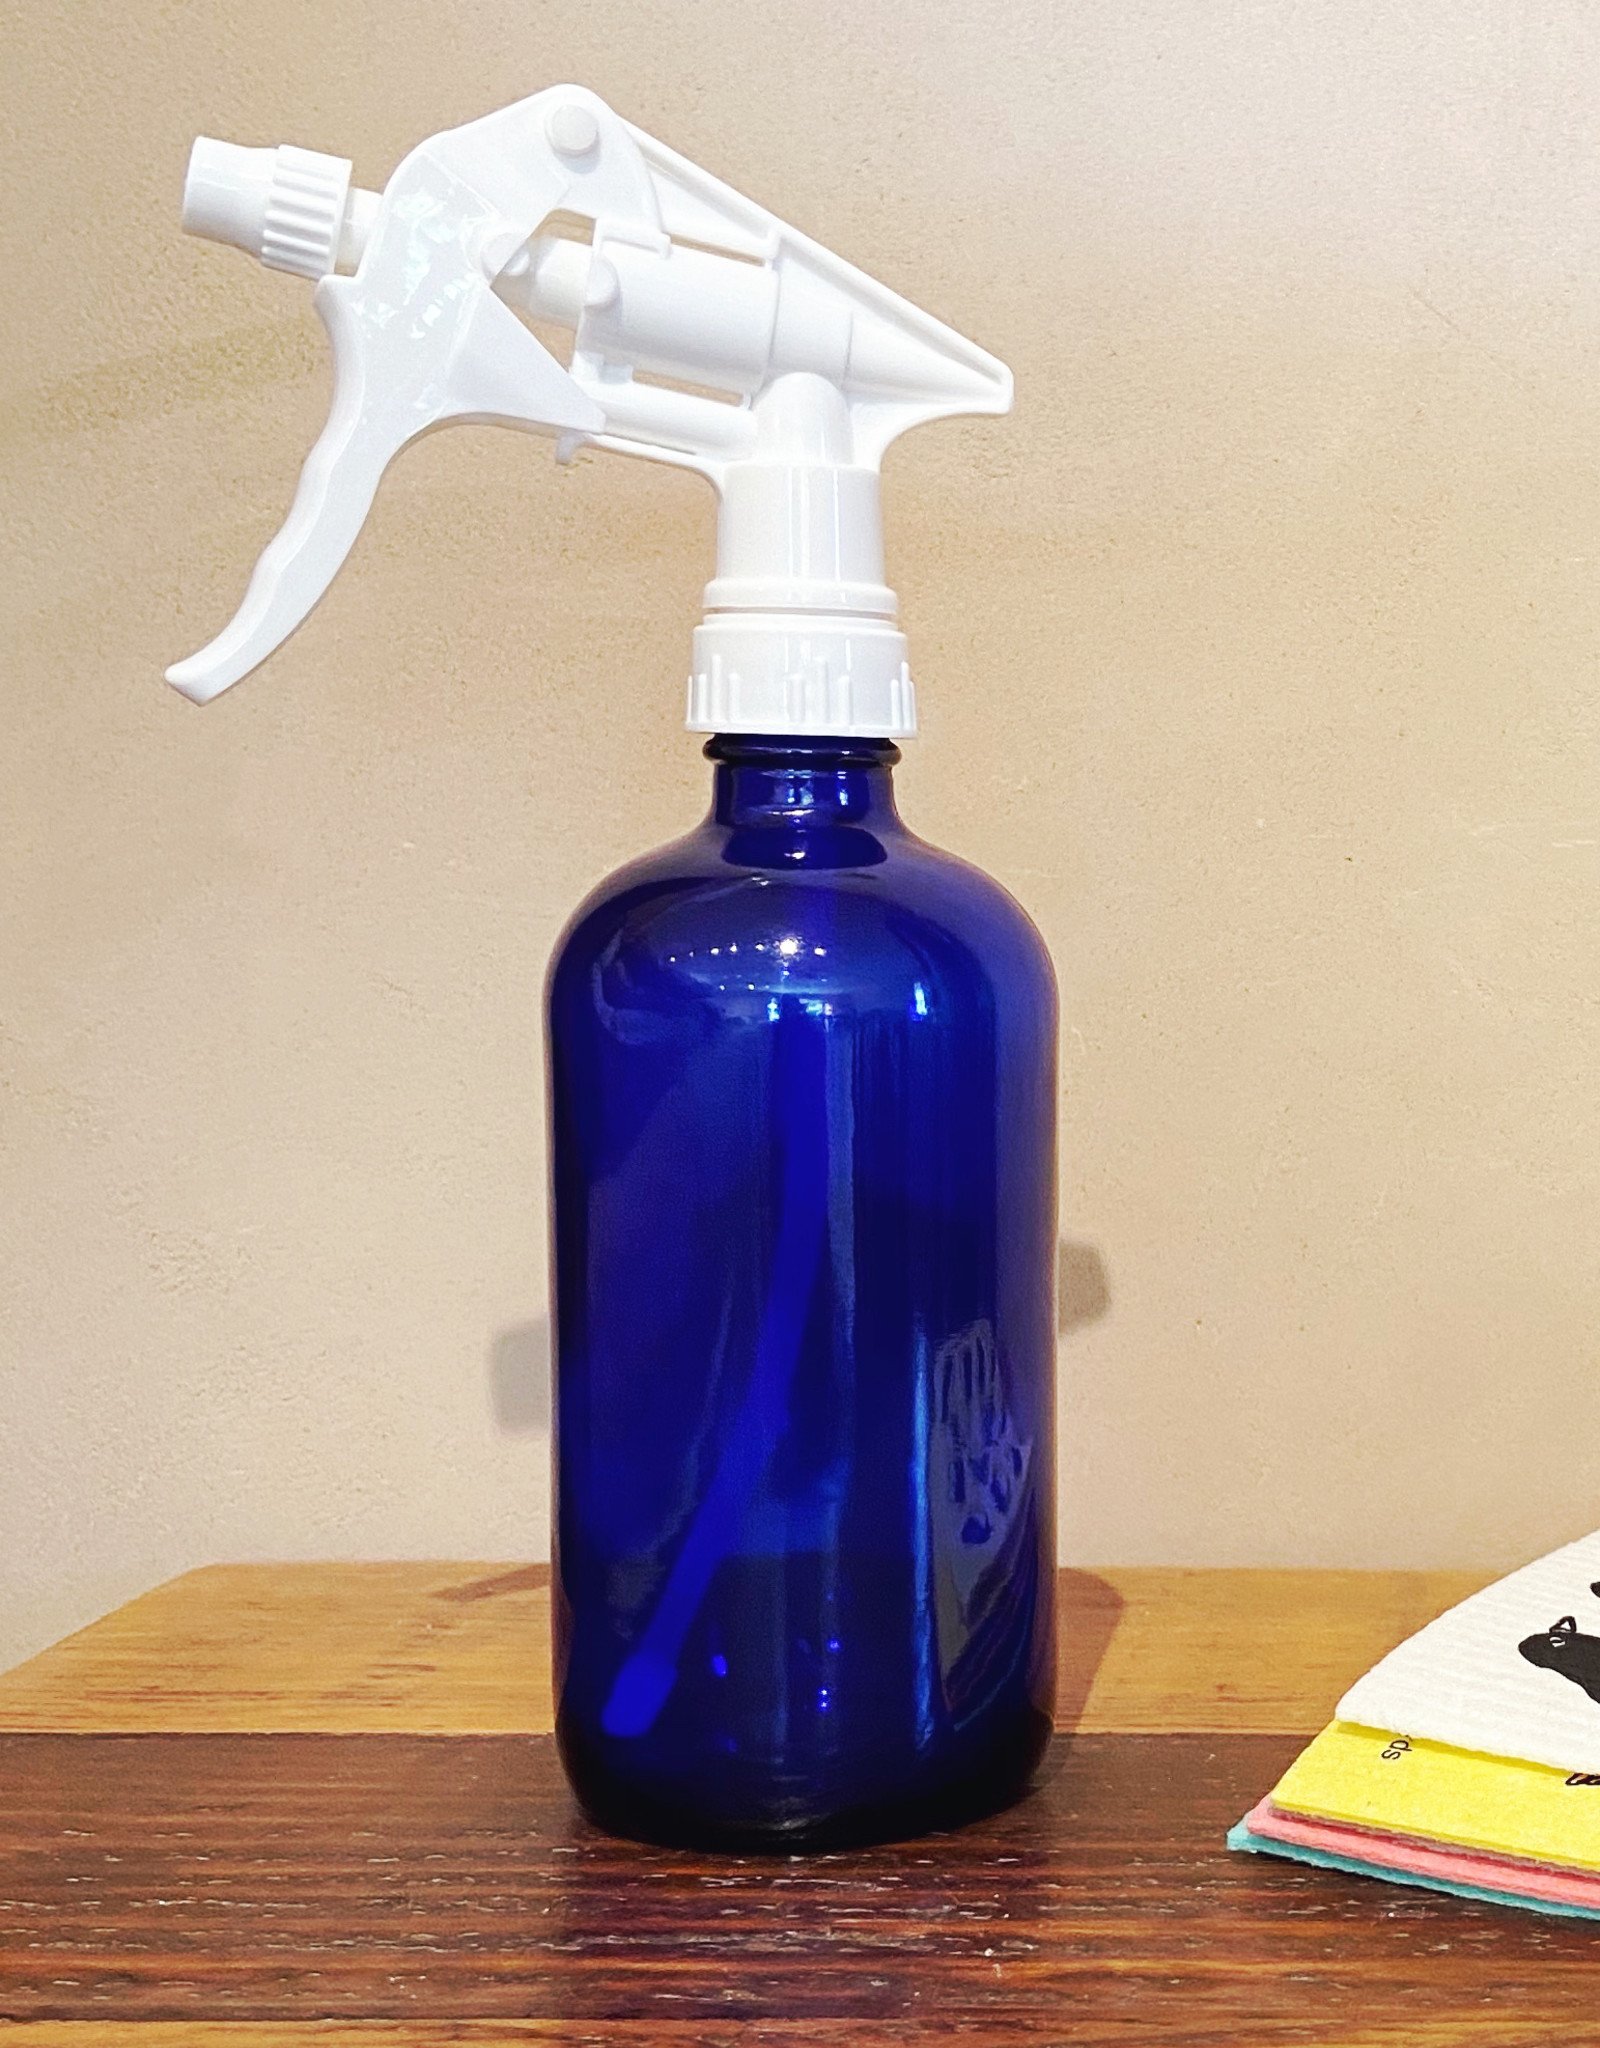 Organic Disinfectant Solution Spray